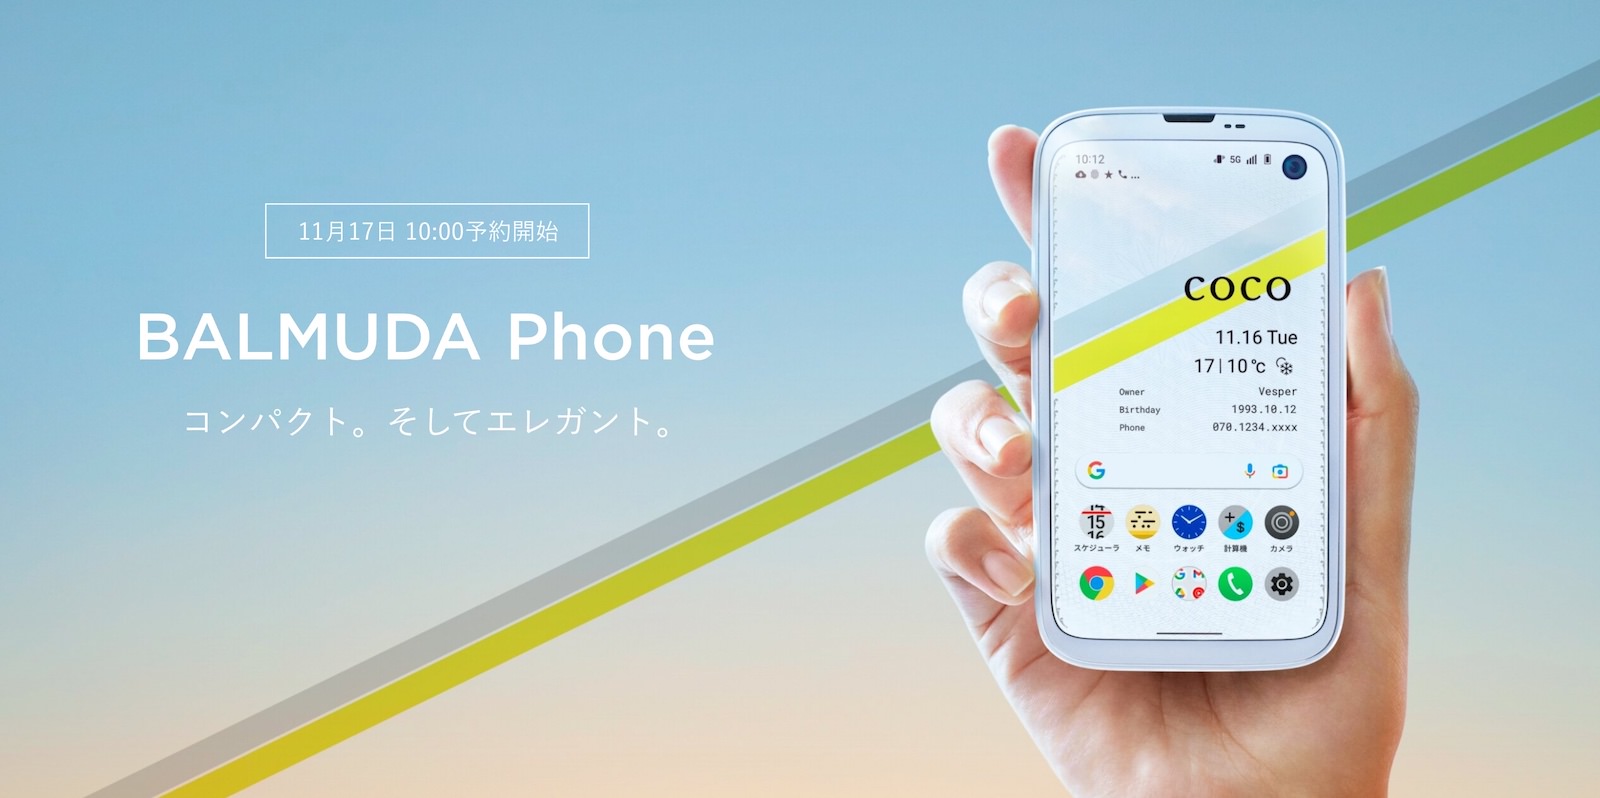 Blalmuda-Phone-Official-Release.jpg